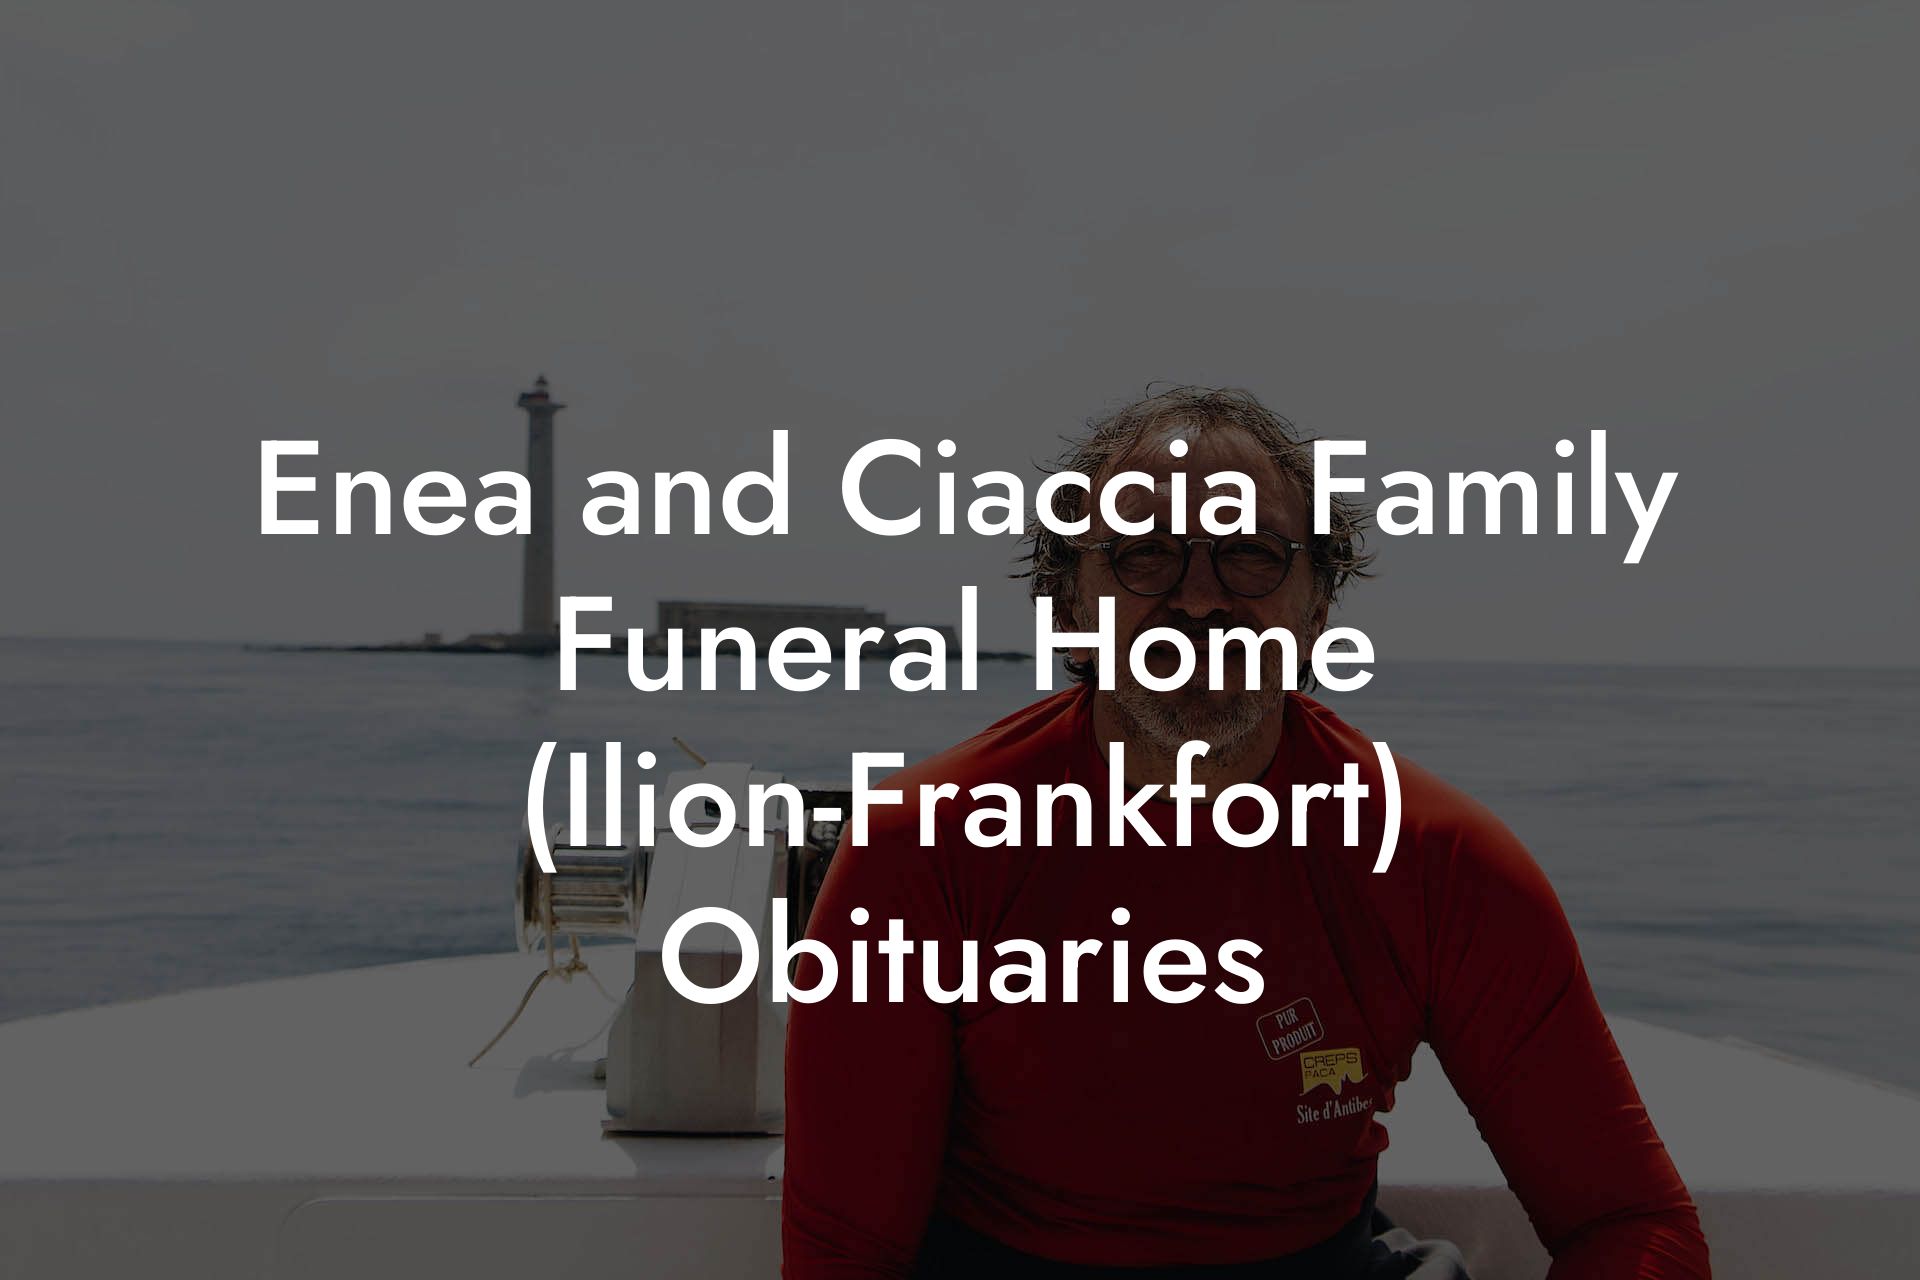 Enea and Ciaccia Family Funeral Home (Ilion-Frankfort) Obituaries